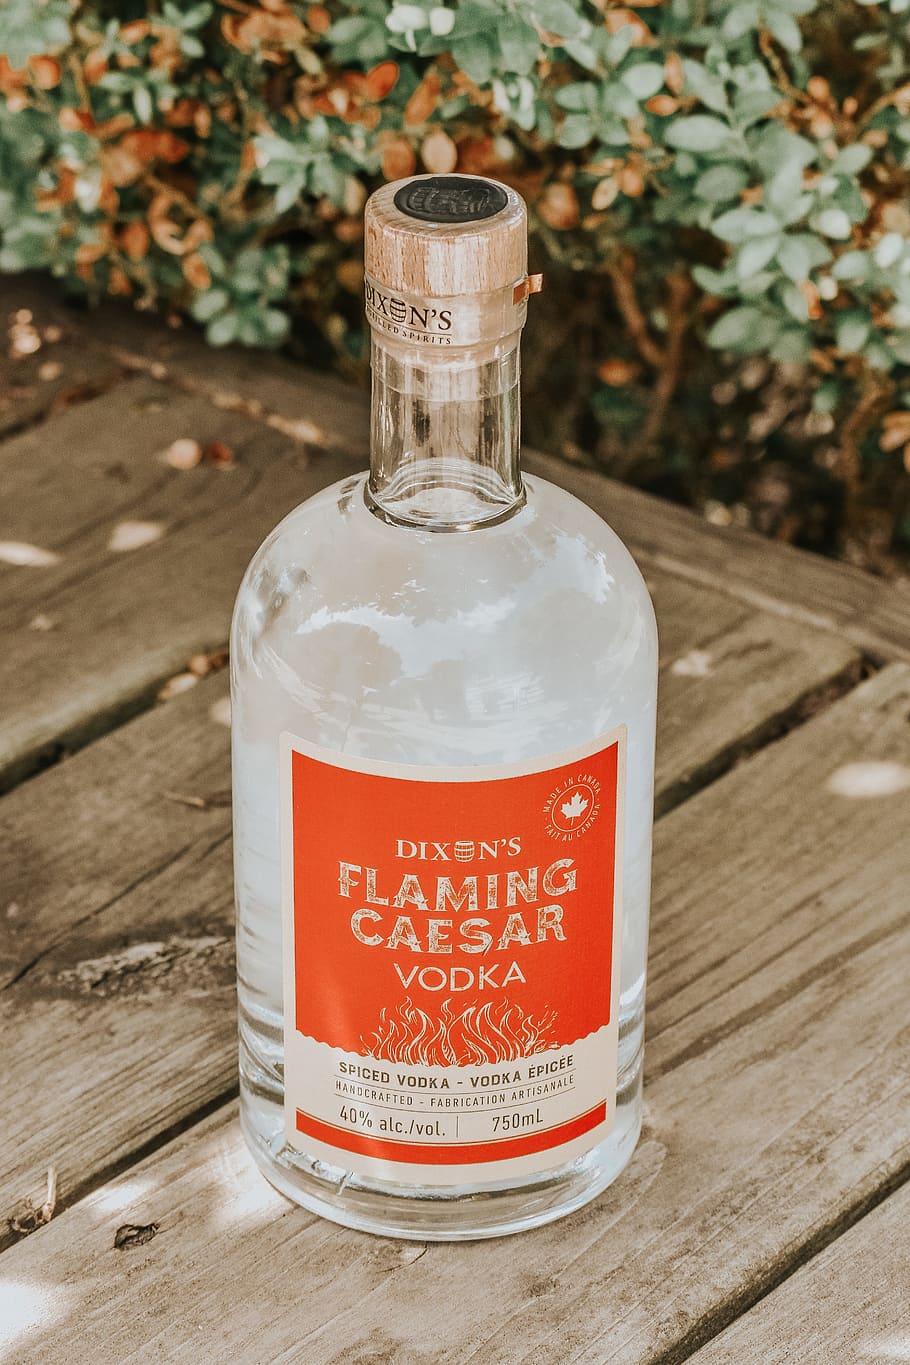 Dixens Flaming Caesar Vodka bottle, alcohol, spirit, spiced vodka